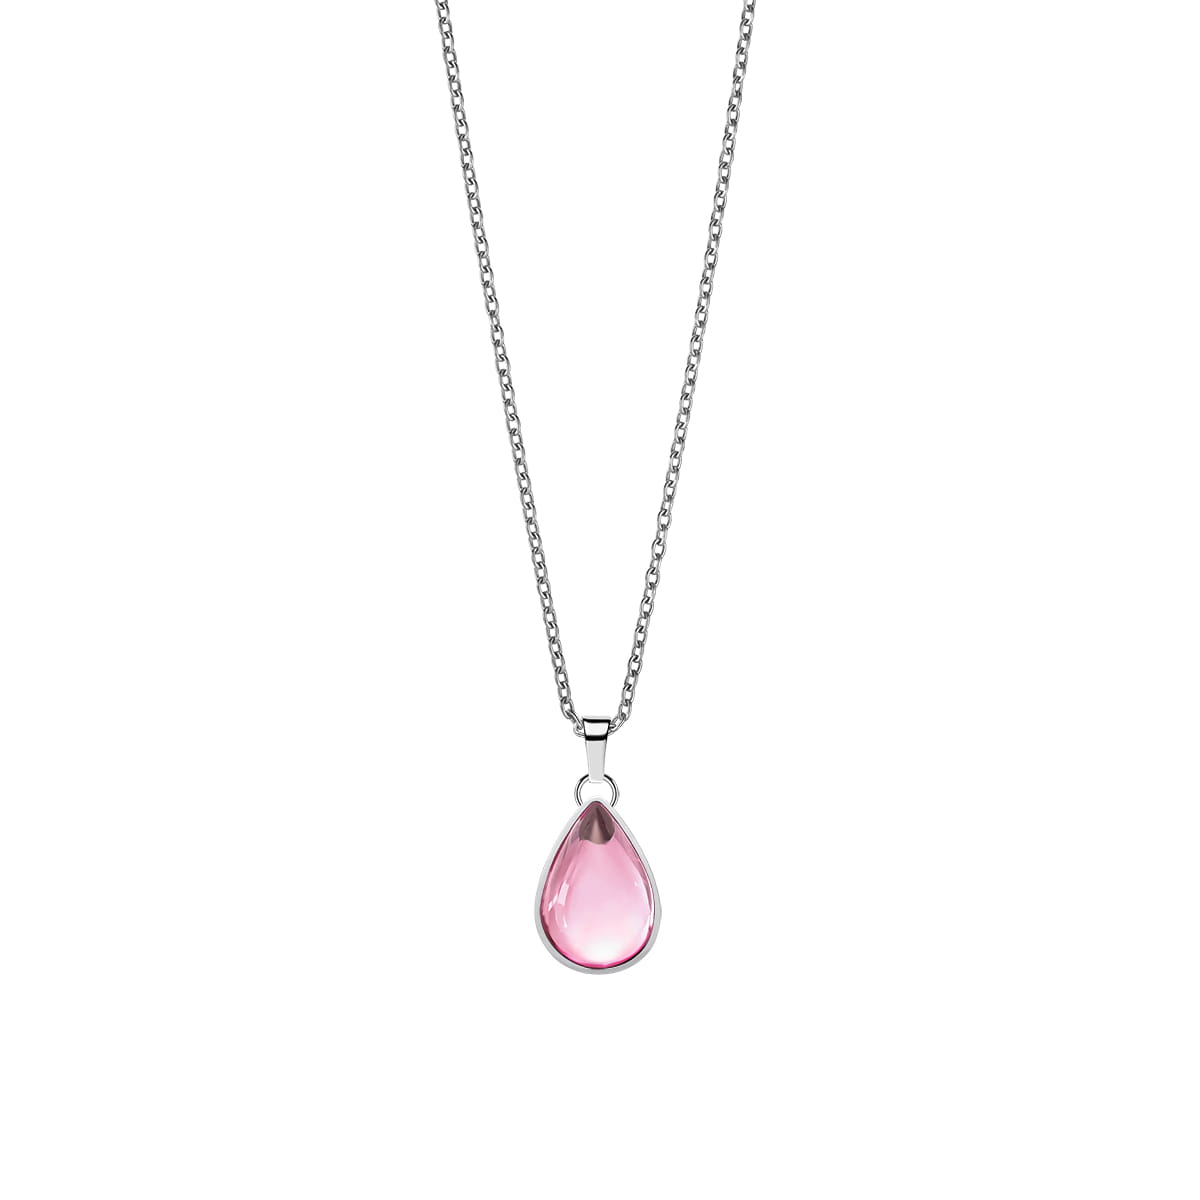 Bering Collier Edelstahl Kristall Pink 440-1712-450